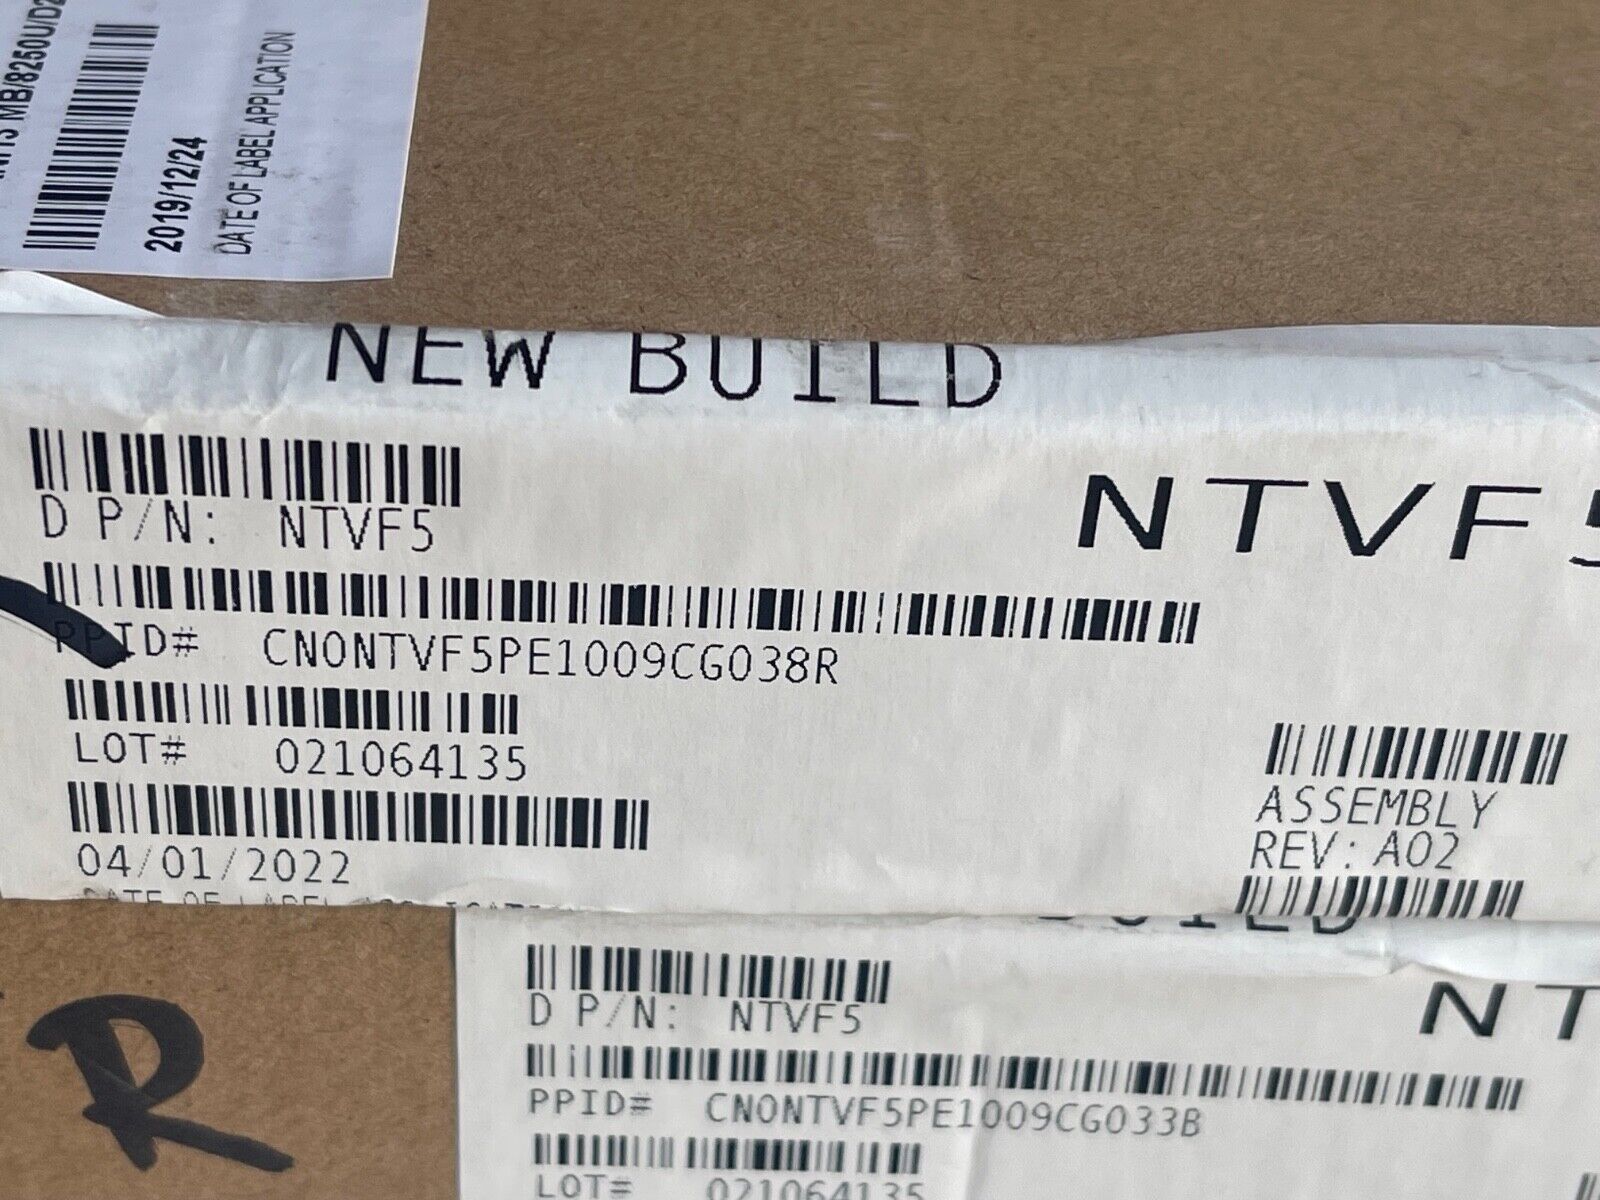 New Genuine Dell Inspiron 5370 CN-0NTVF5  NTVF5 w i5-8250U CPU Motherboard